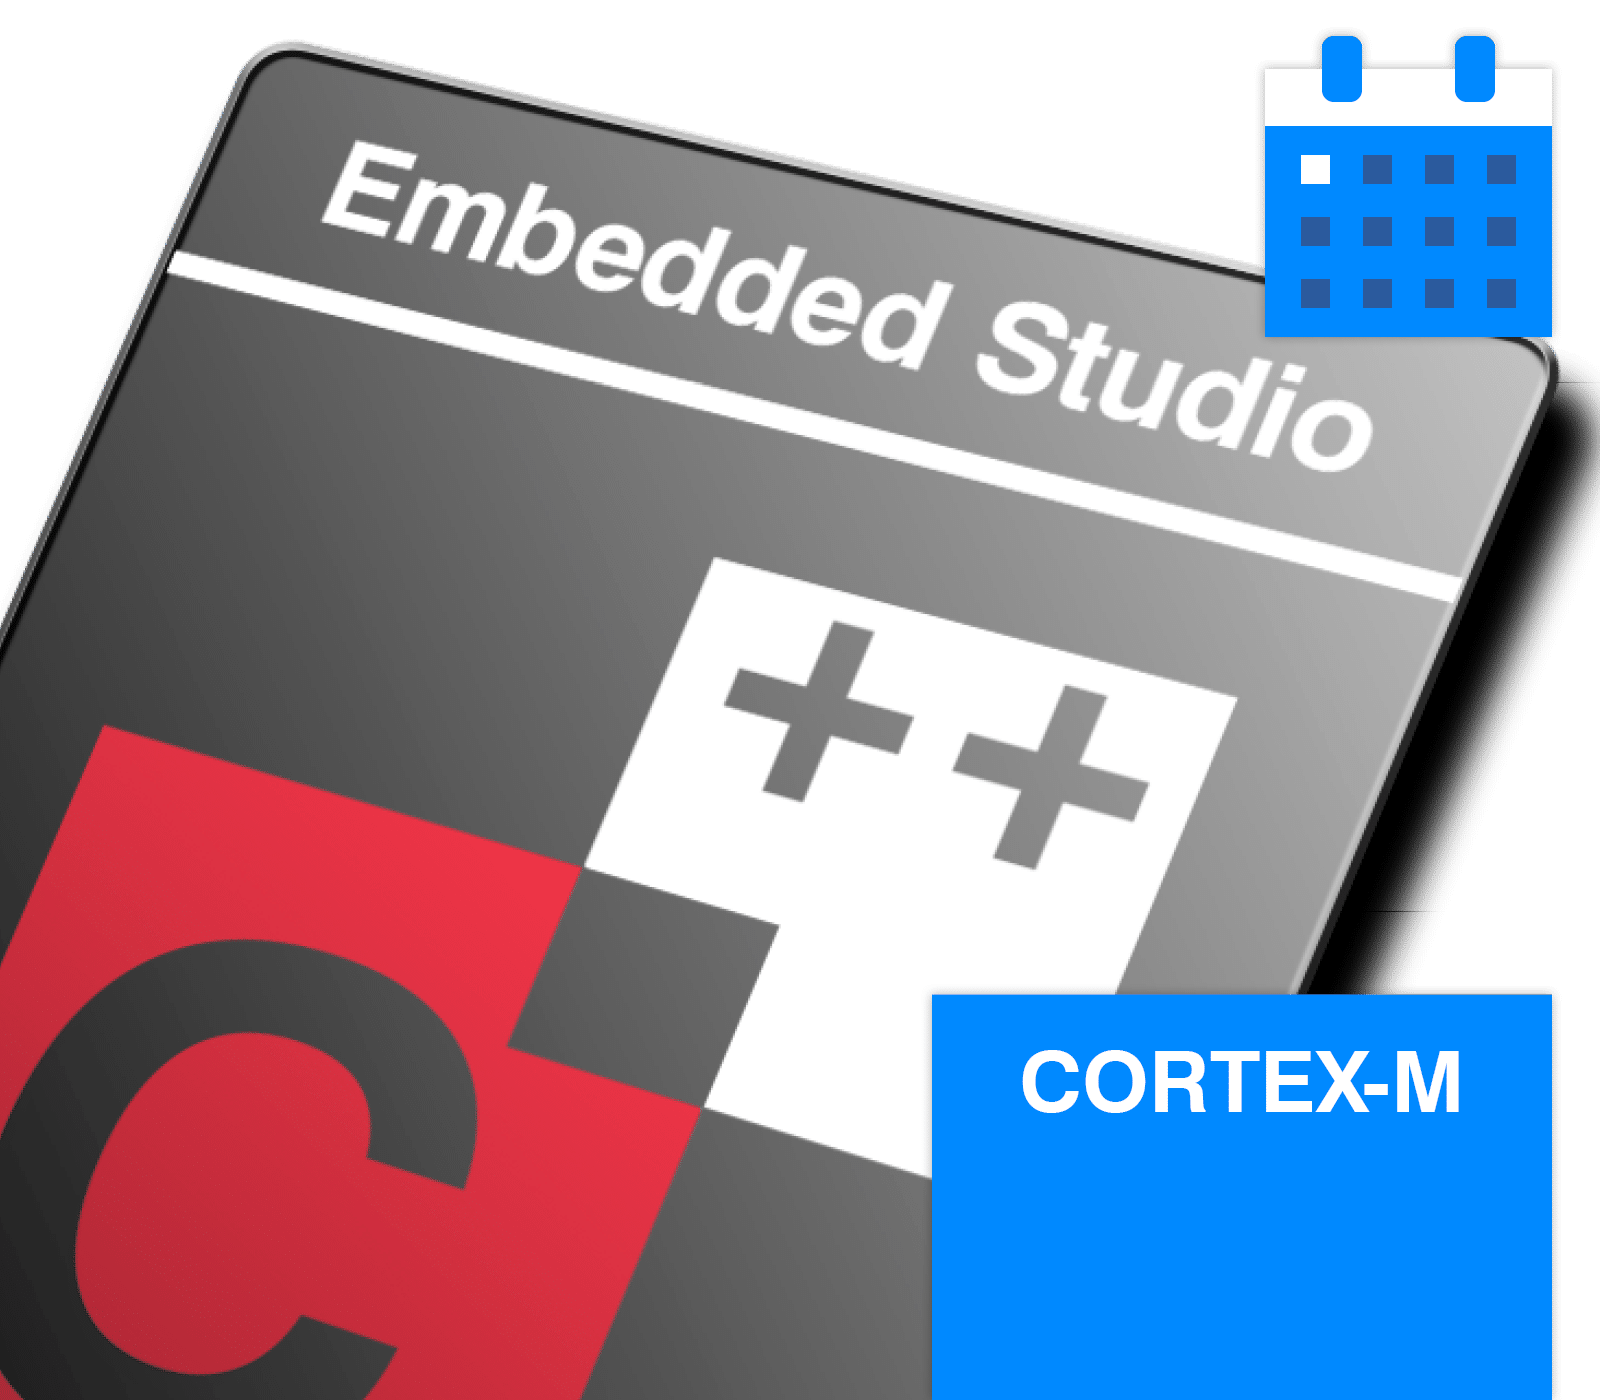 SEGGER Embedded Studio Cortex-M Maintenance